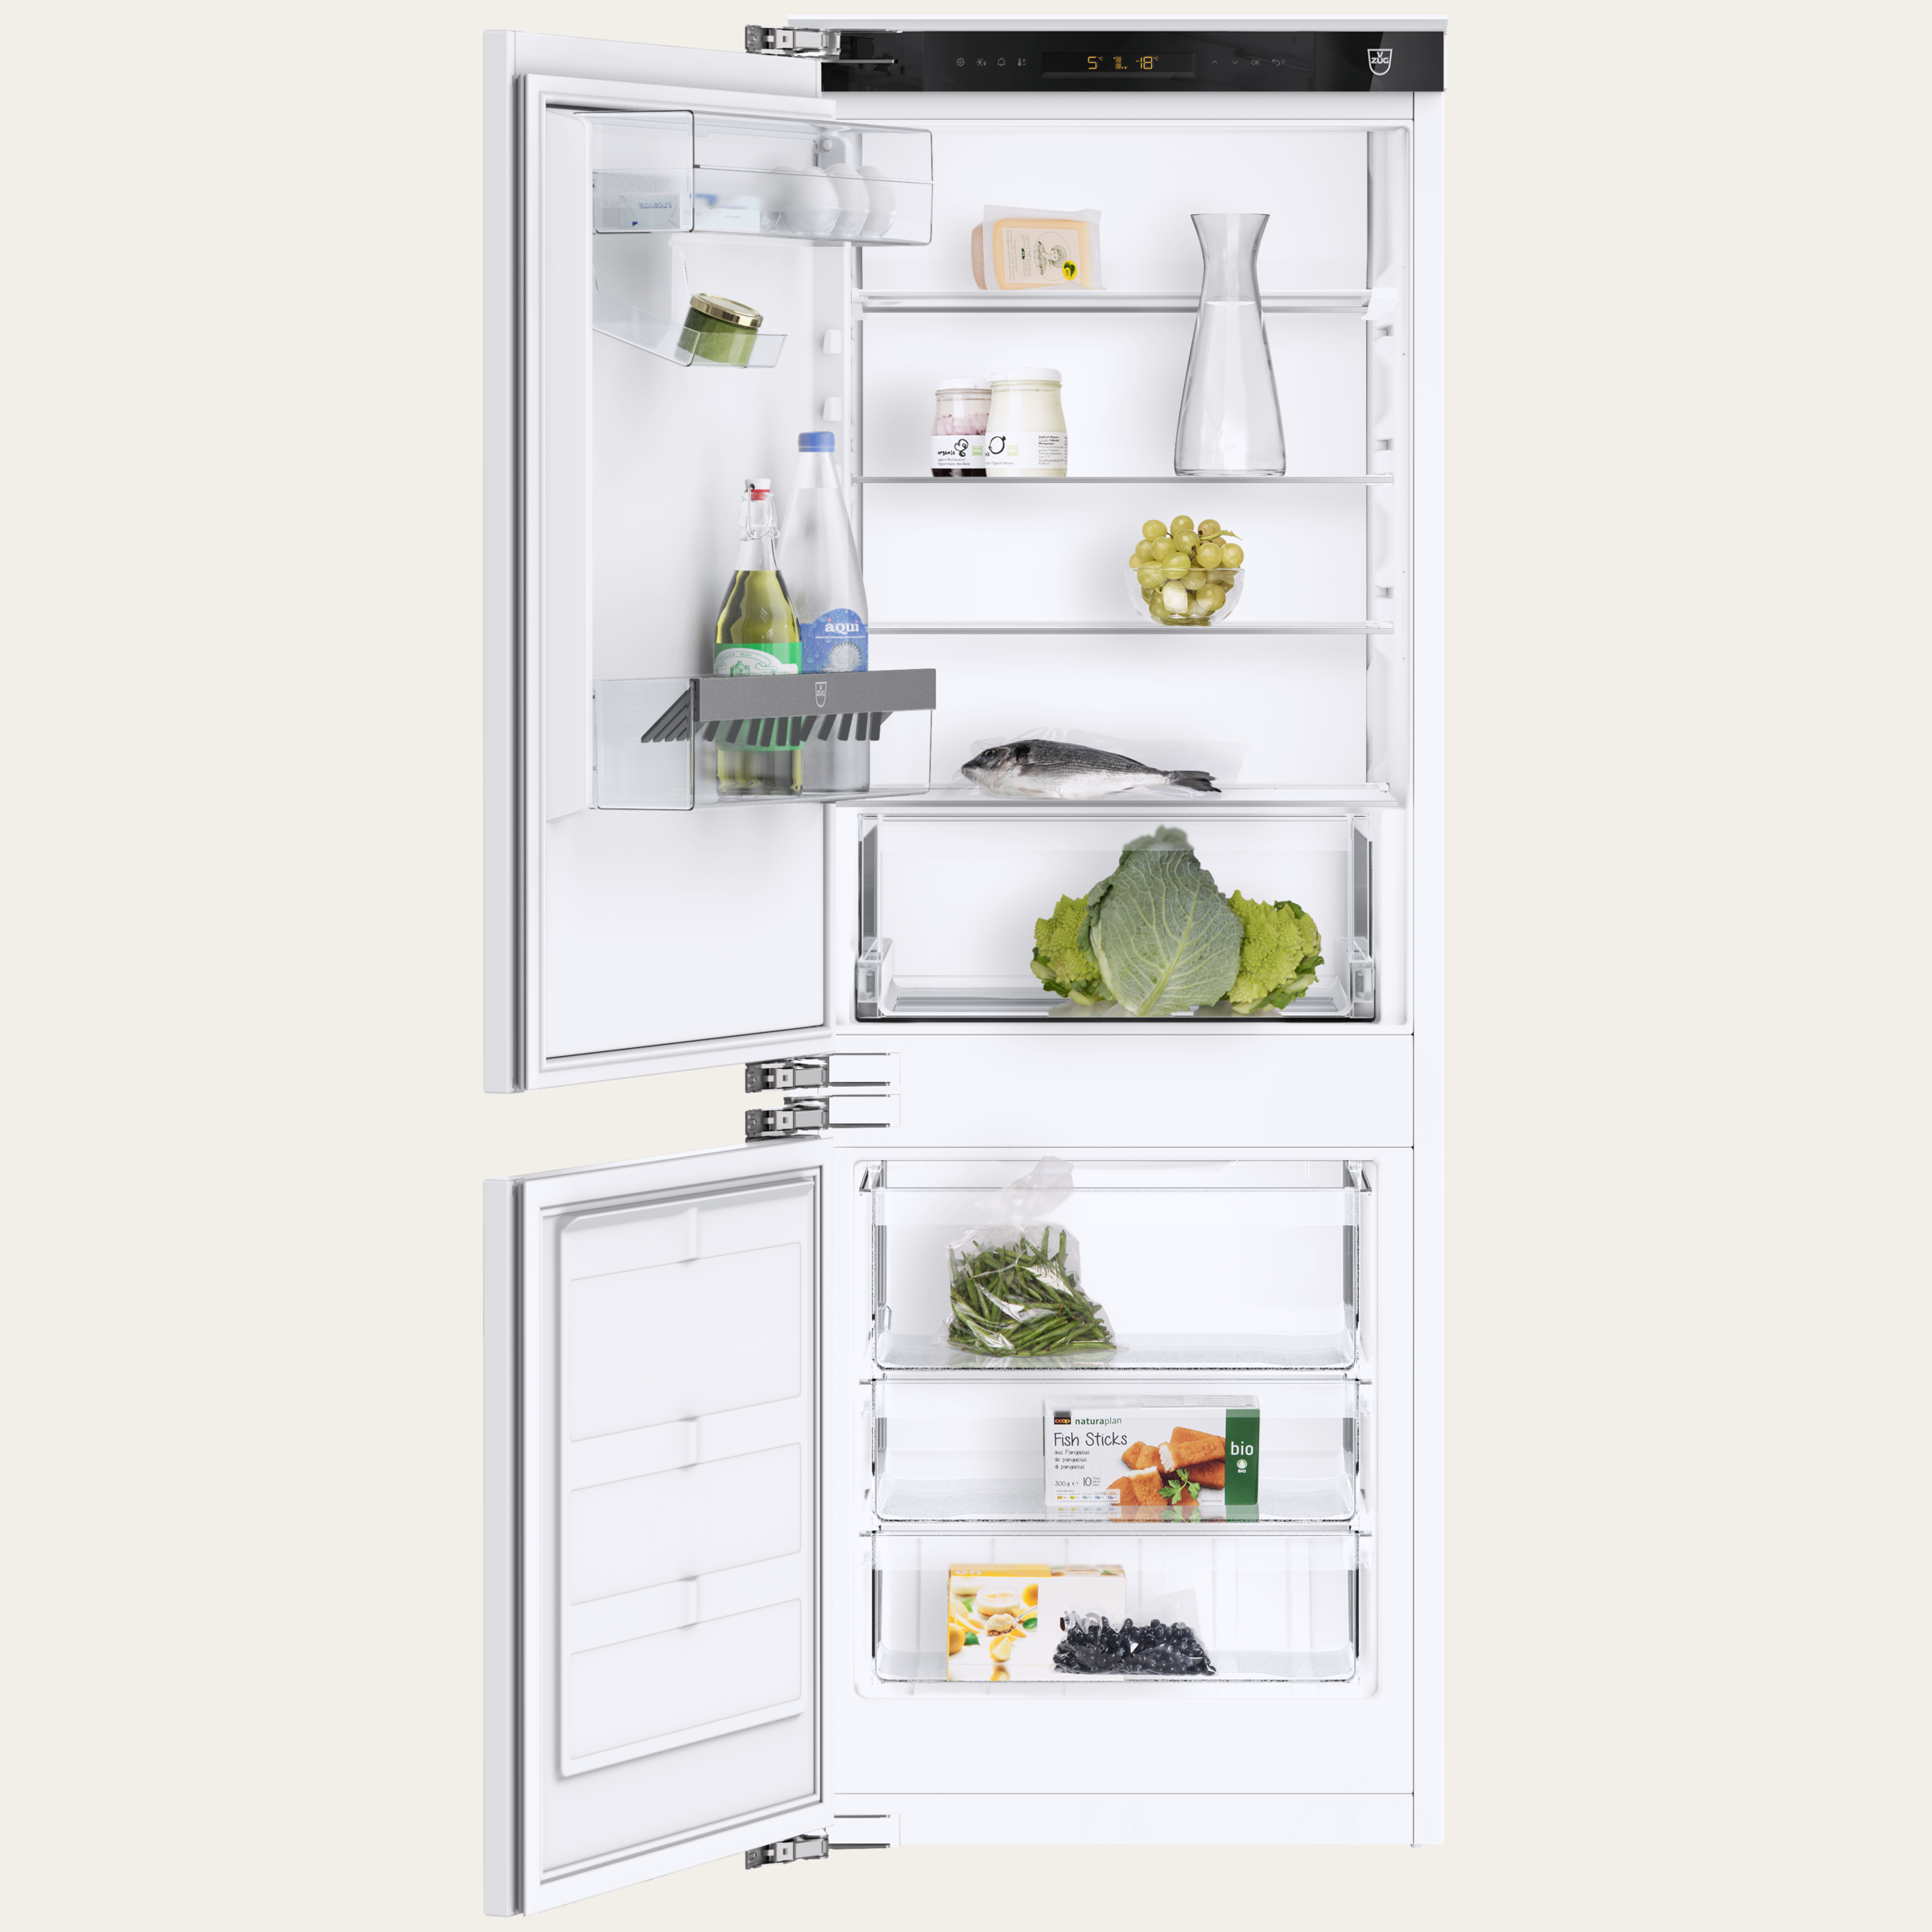 V-ZUG Refrigerators, CombiCooler V2000 152NI, Standard width: 60 cm, Standard height: 152.4 cm, Fully integratable, Door hinge: Left, TouchControl, NoFrost